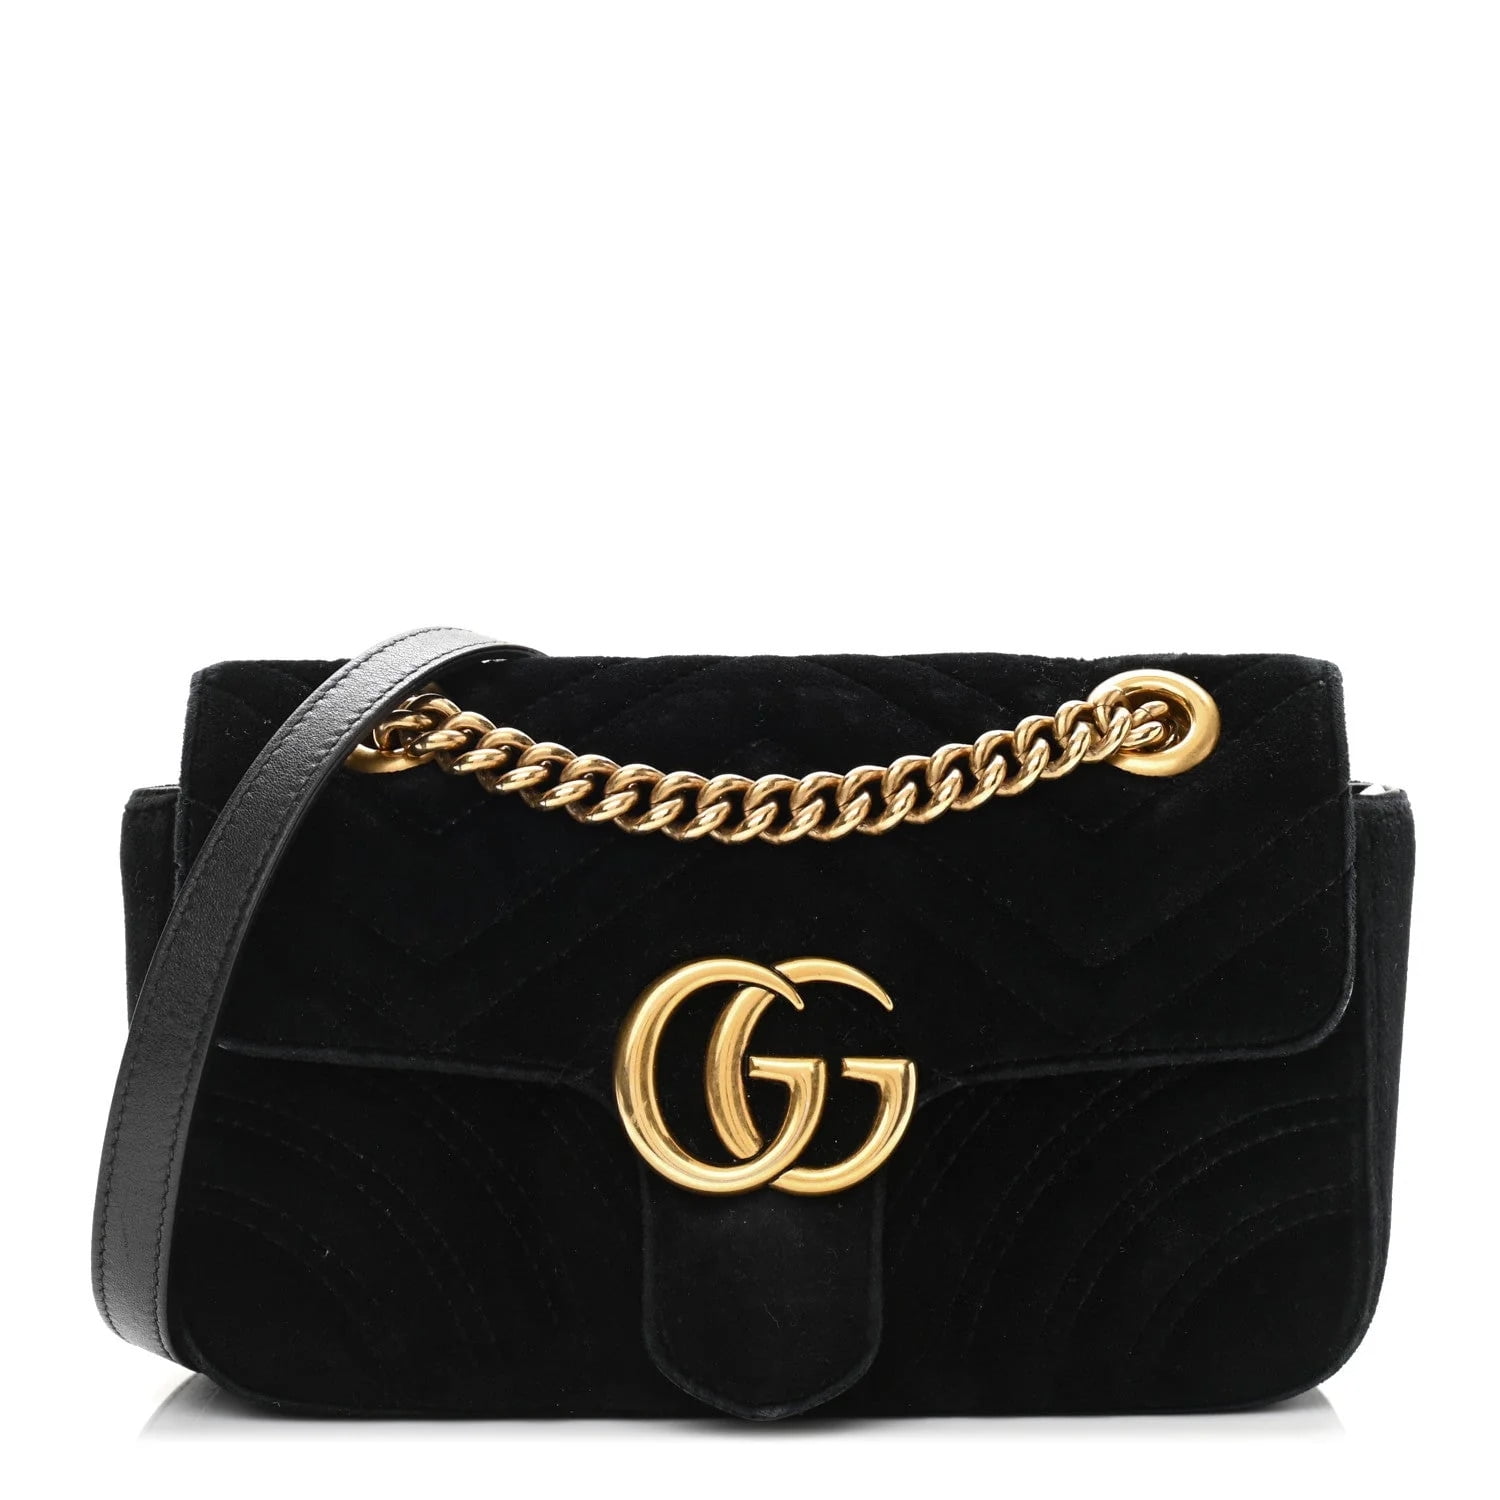 Gucci marmont top Handle mini bag white  Black gucci bag, Gucci bag, Fancy  bags